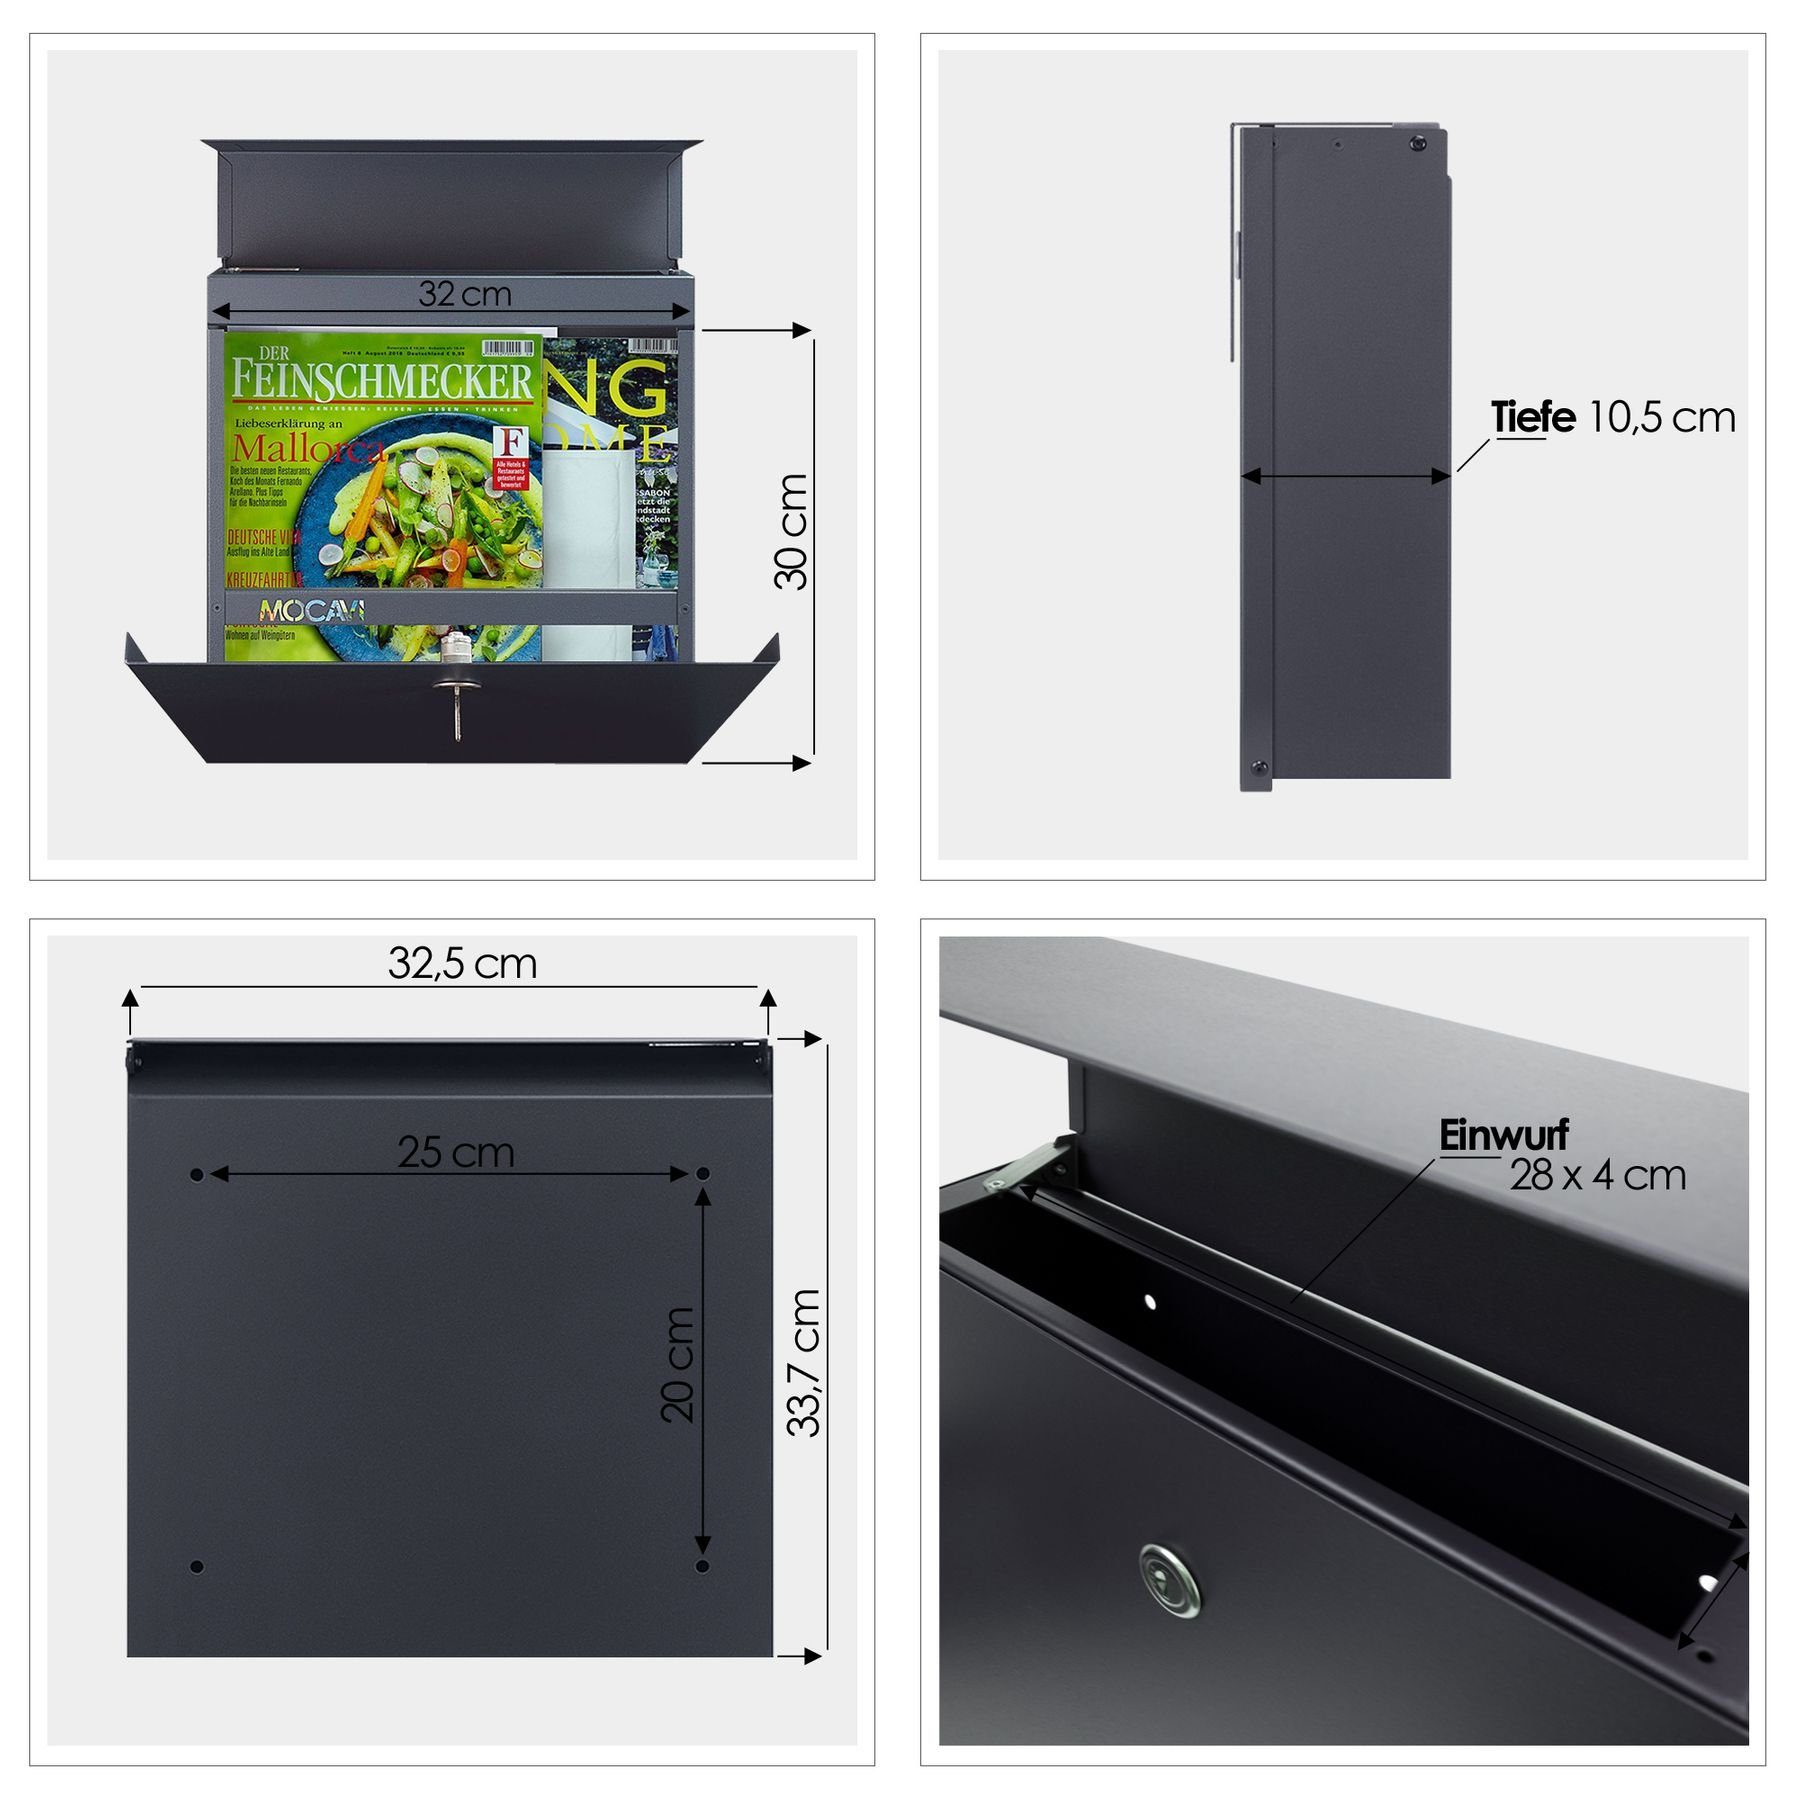 MOCAVI Briefkasten Design-Briefkasten anthrazit-grau 580 Edelstahl 7016) Box MOCAVI (RAL 